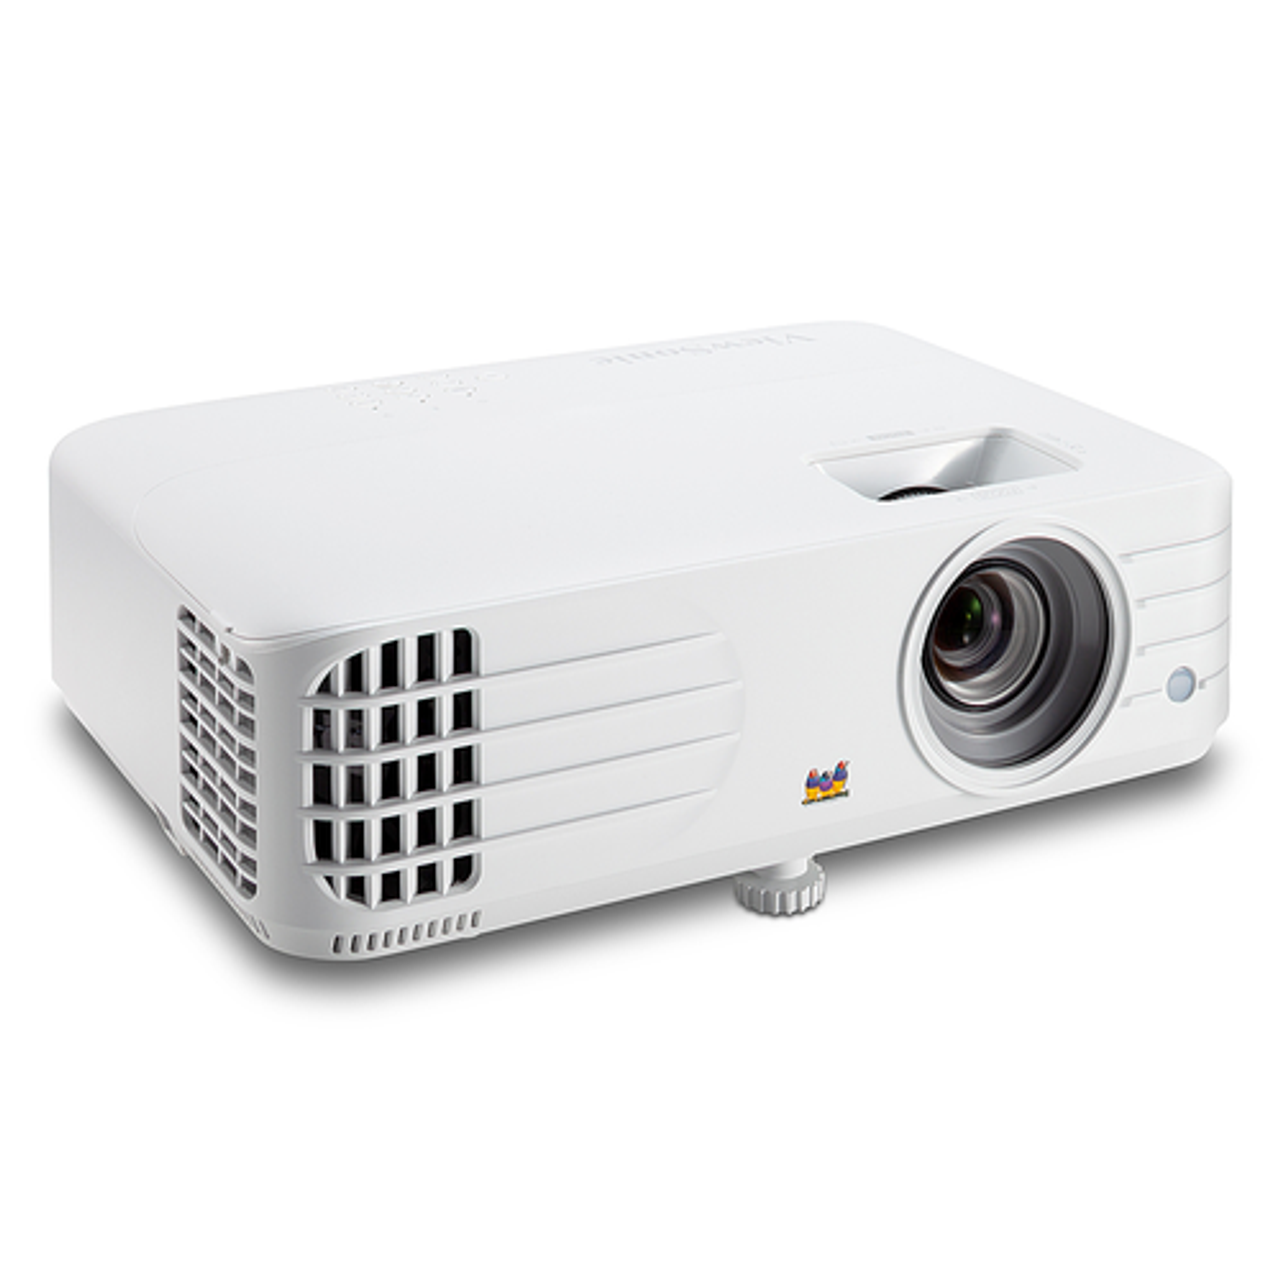 ViewSonic PX701HDH 1080p Projector, 3500 Lumens, SuperColor, Vertical Lens Shift, Dual HDMI, 10w Speaker - White